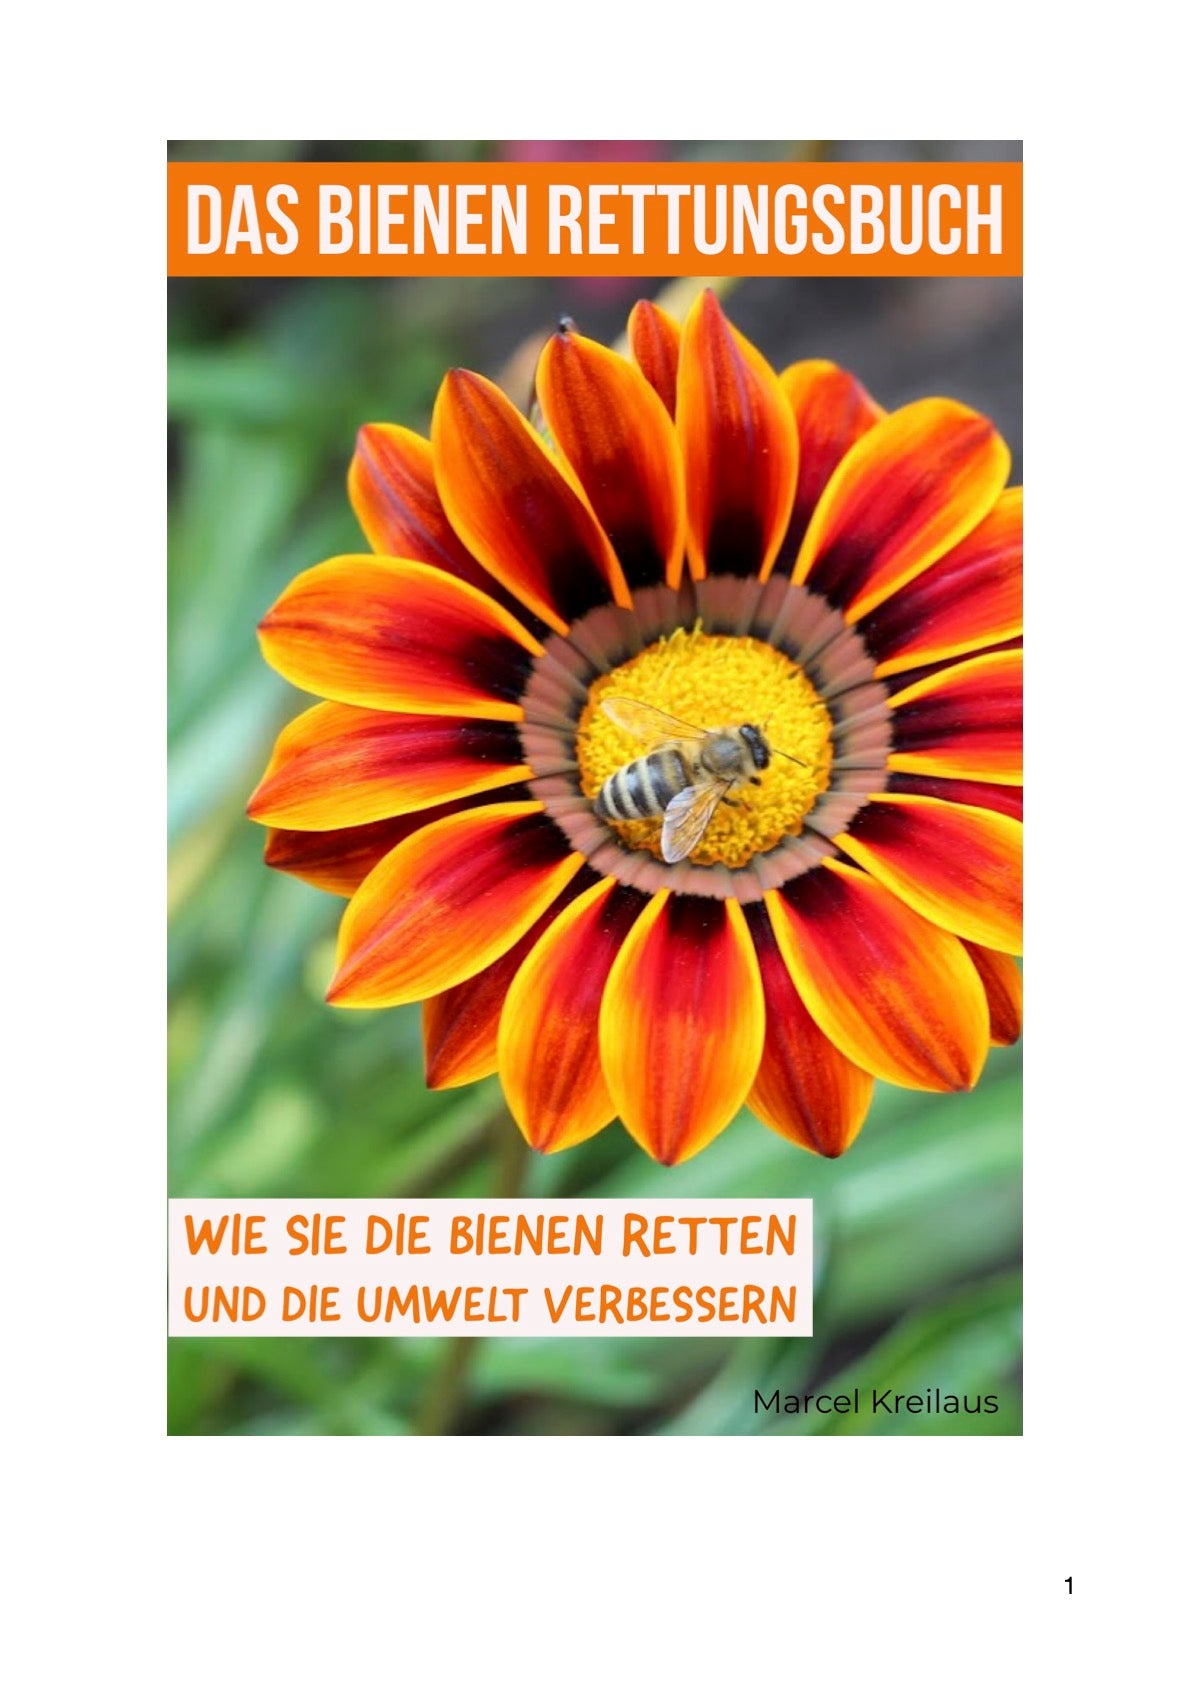 MADEIRA - Bienenwachstücher, 3er Set Wachspapier Inkl. Ebook "Das Bienenrettungsbuch" freeshipping - Meer Coco